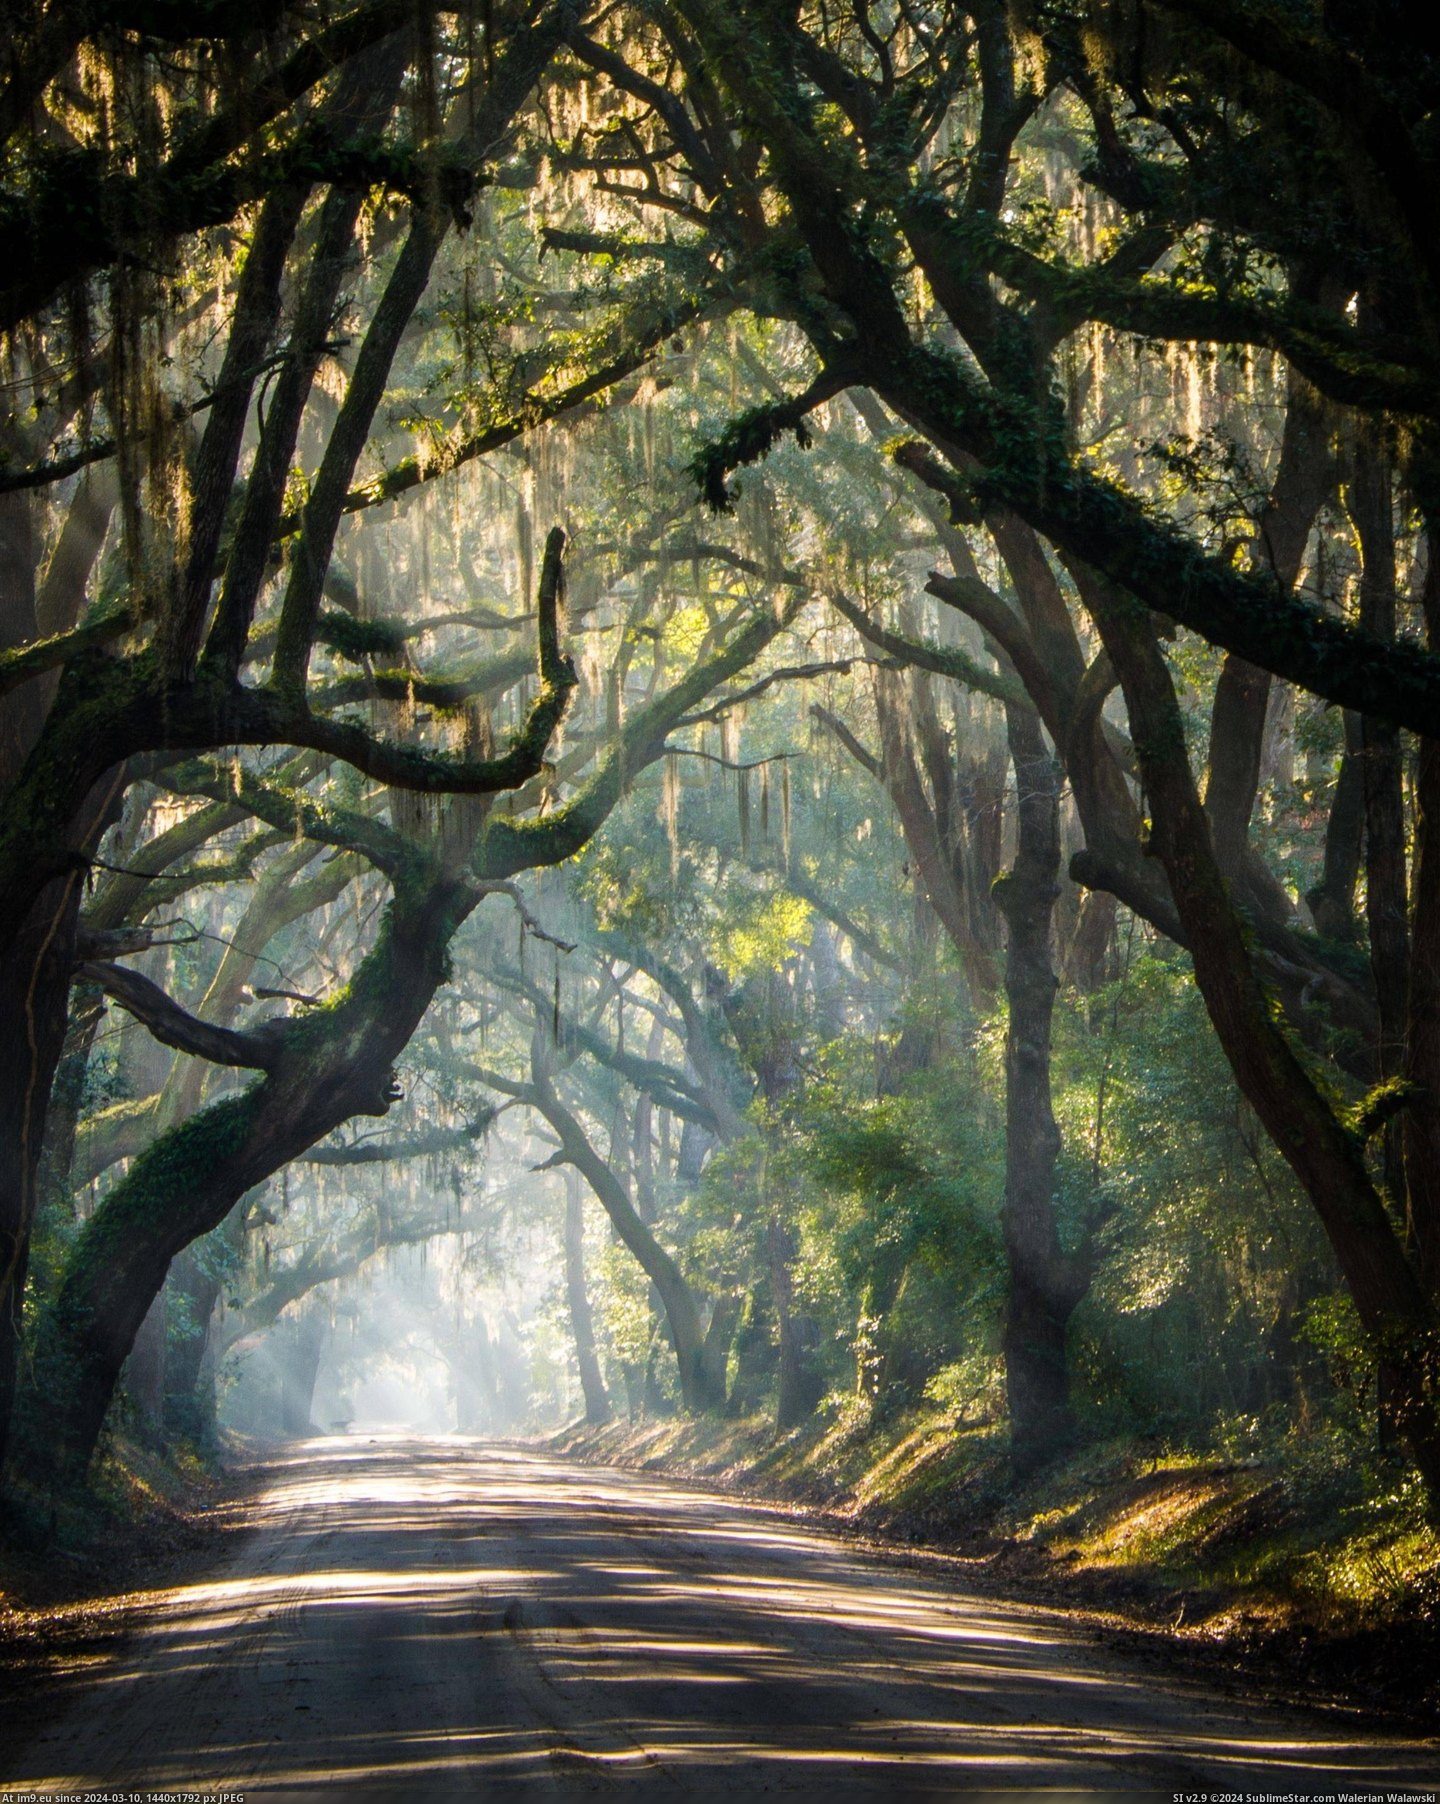 #South #Rural #Roads #Carolina [Pics] The rural roads of South Carolina Pic. (Изображение из альбом My r/PICS favs))